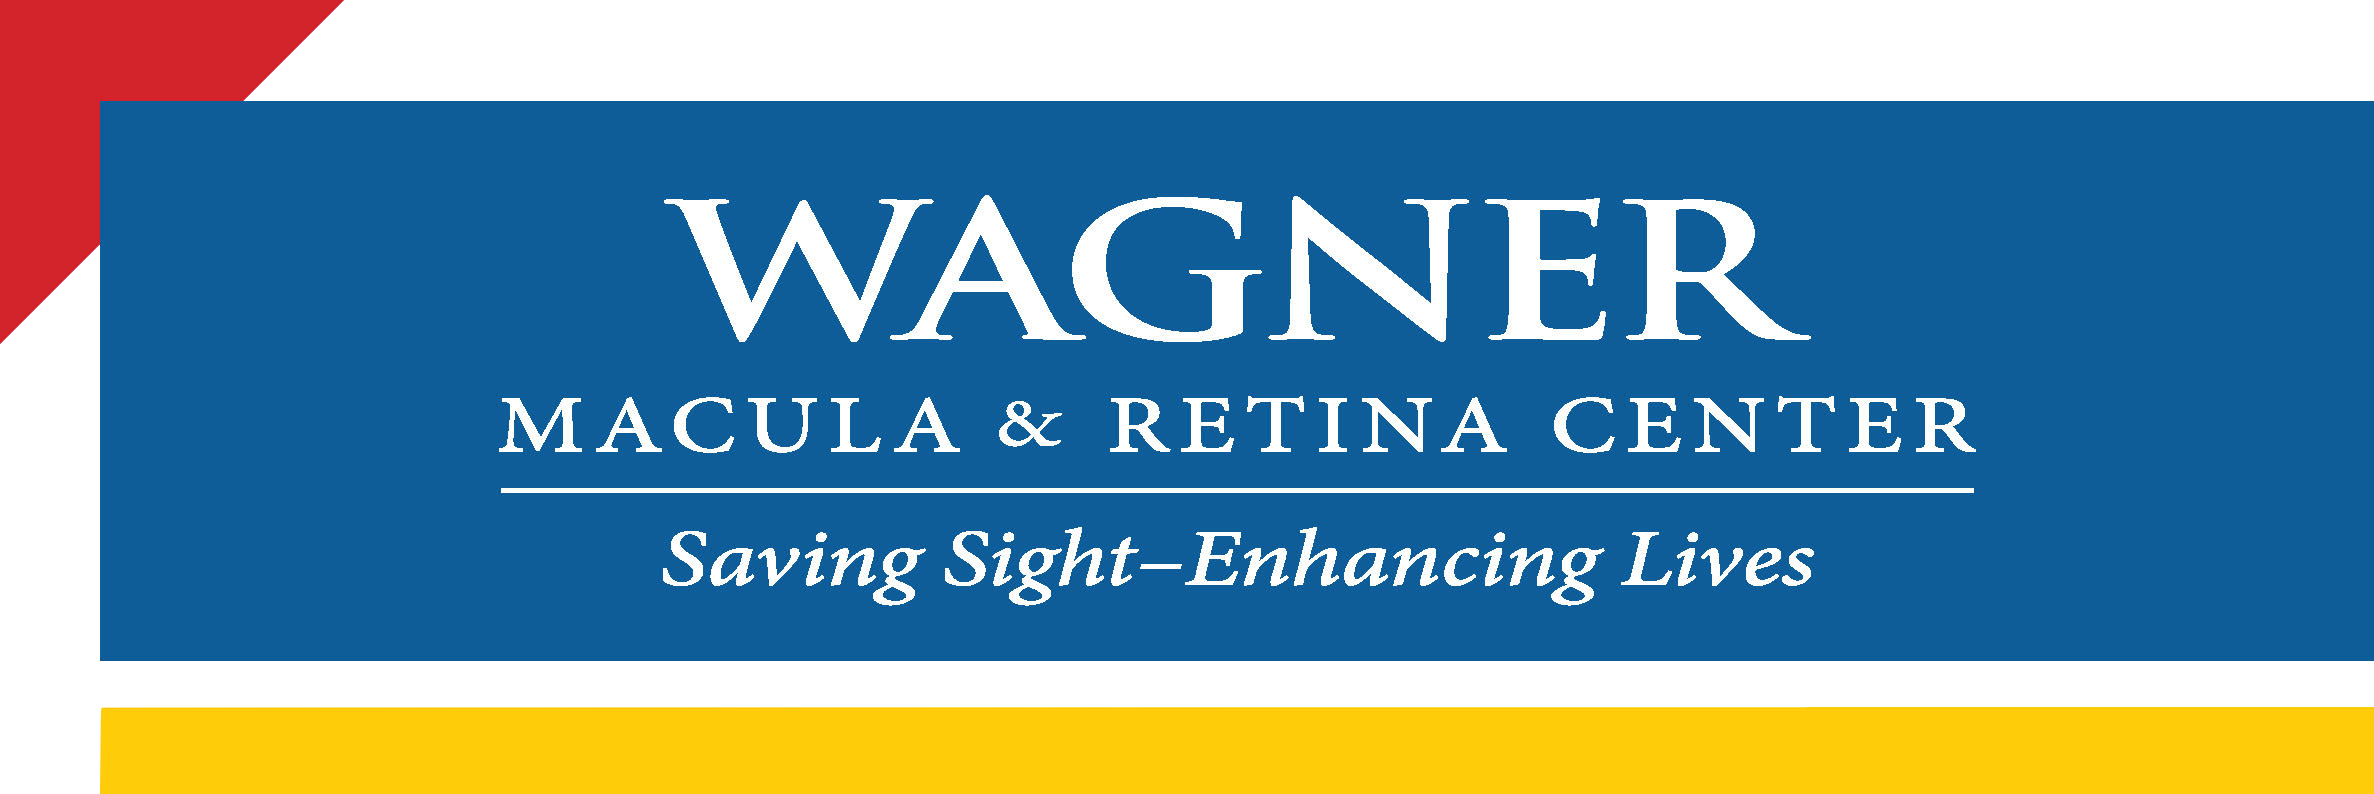 Wagner Macula & Retina Center logo